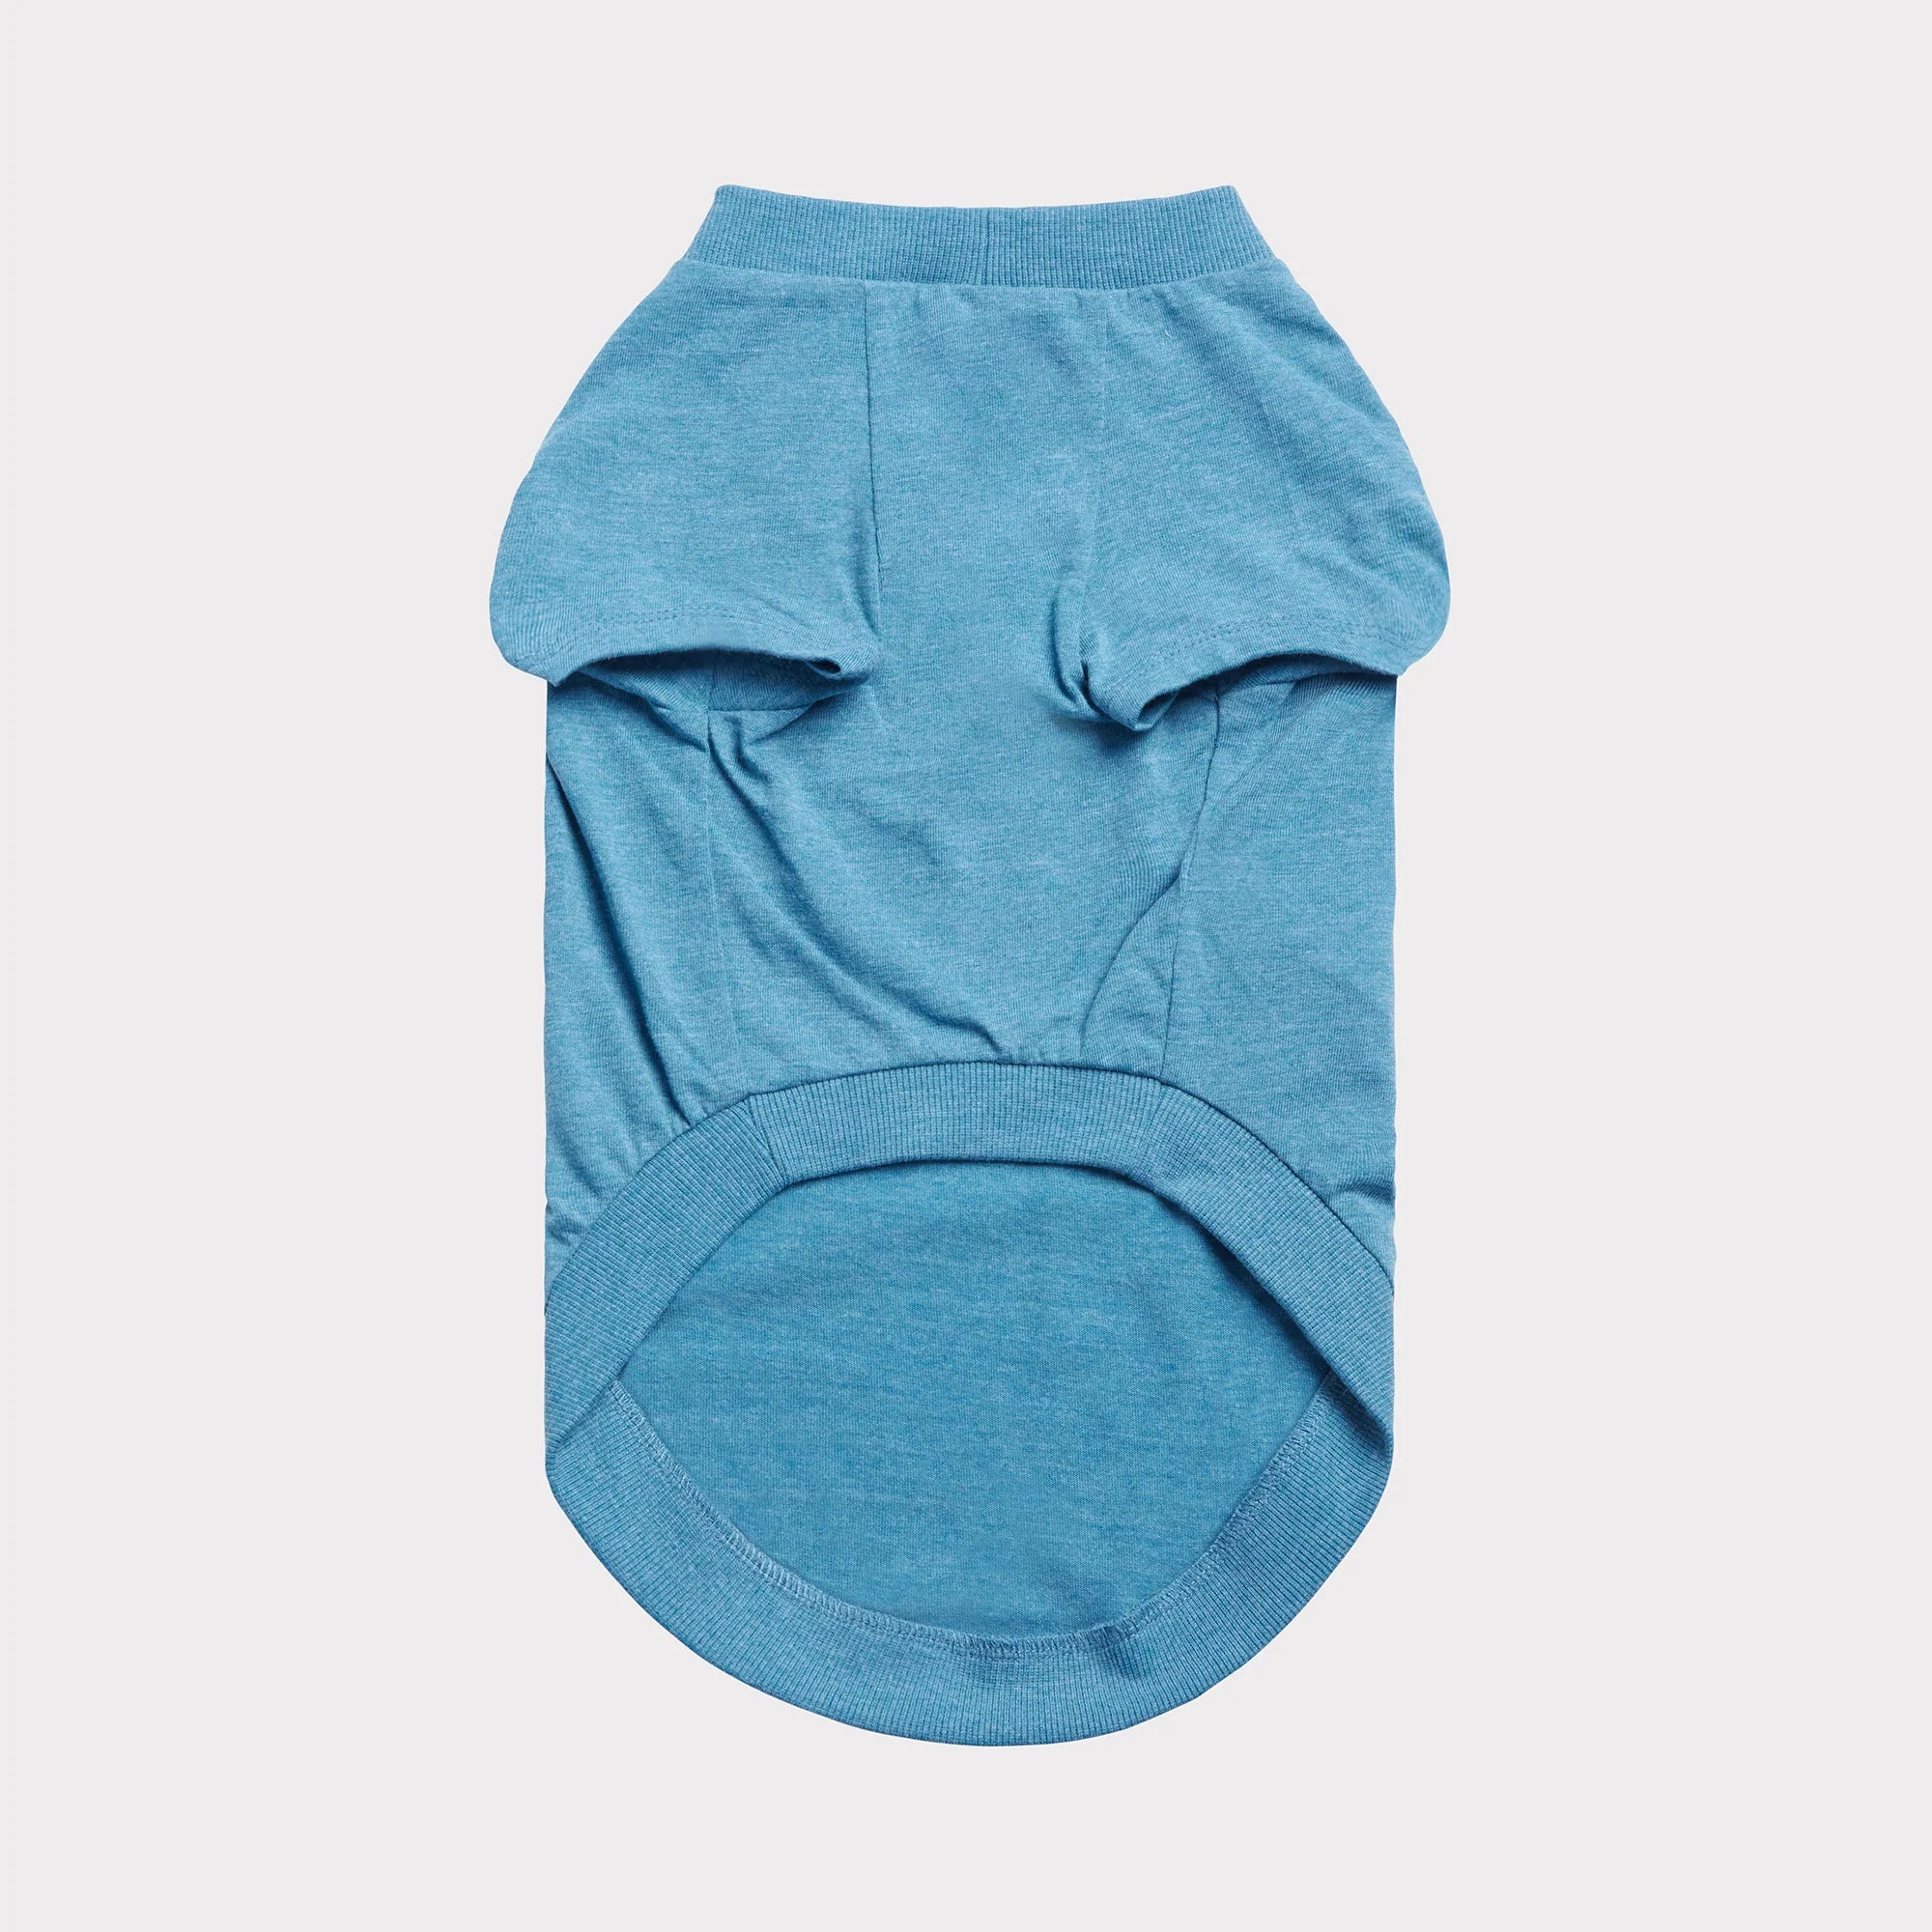 Vintage Graphic Tee Dog T-Shirt - Blue